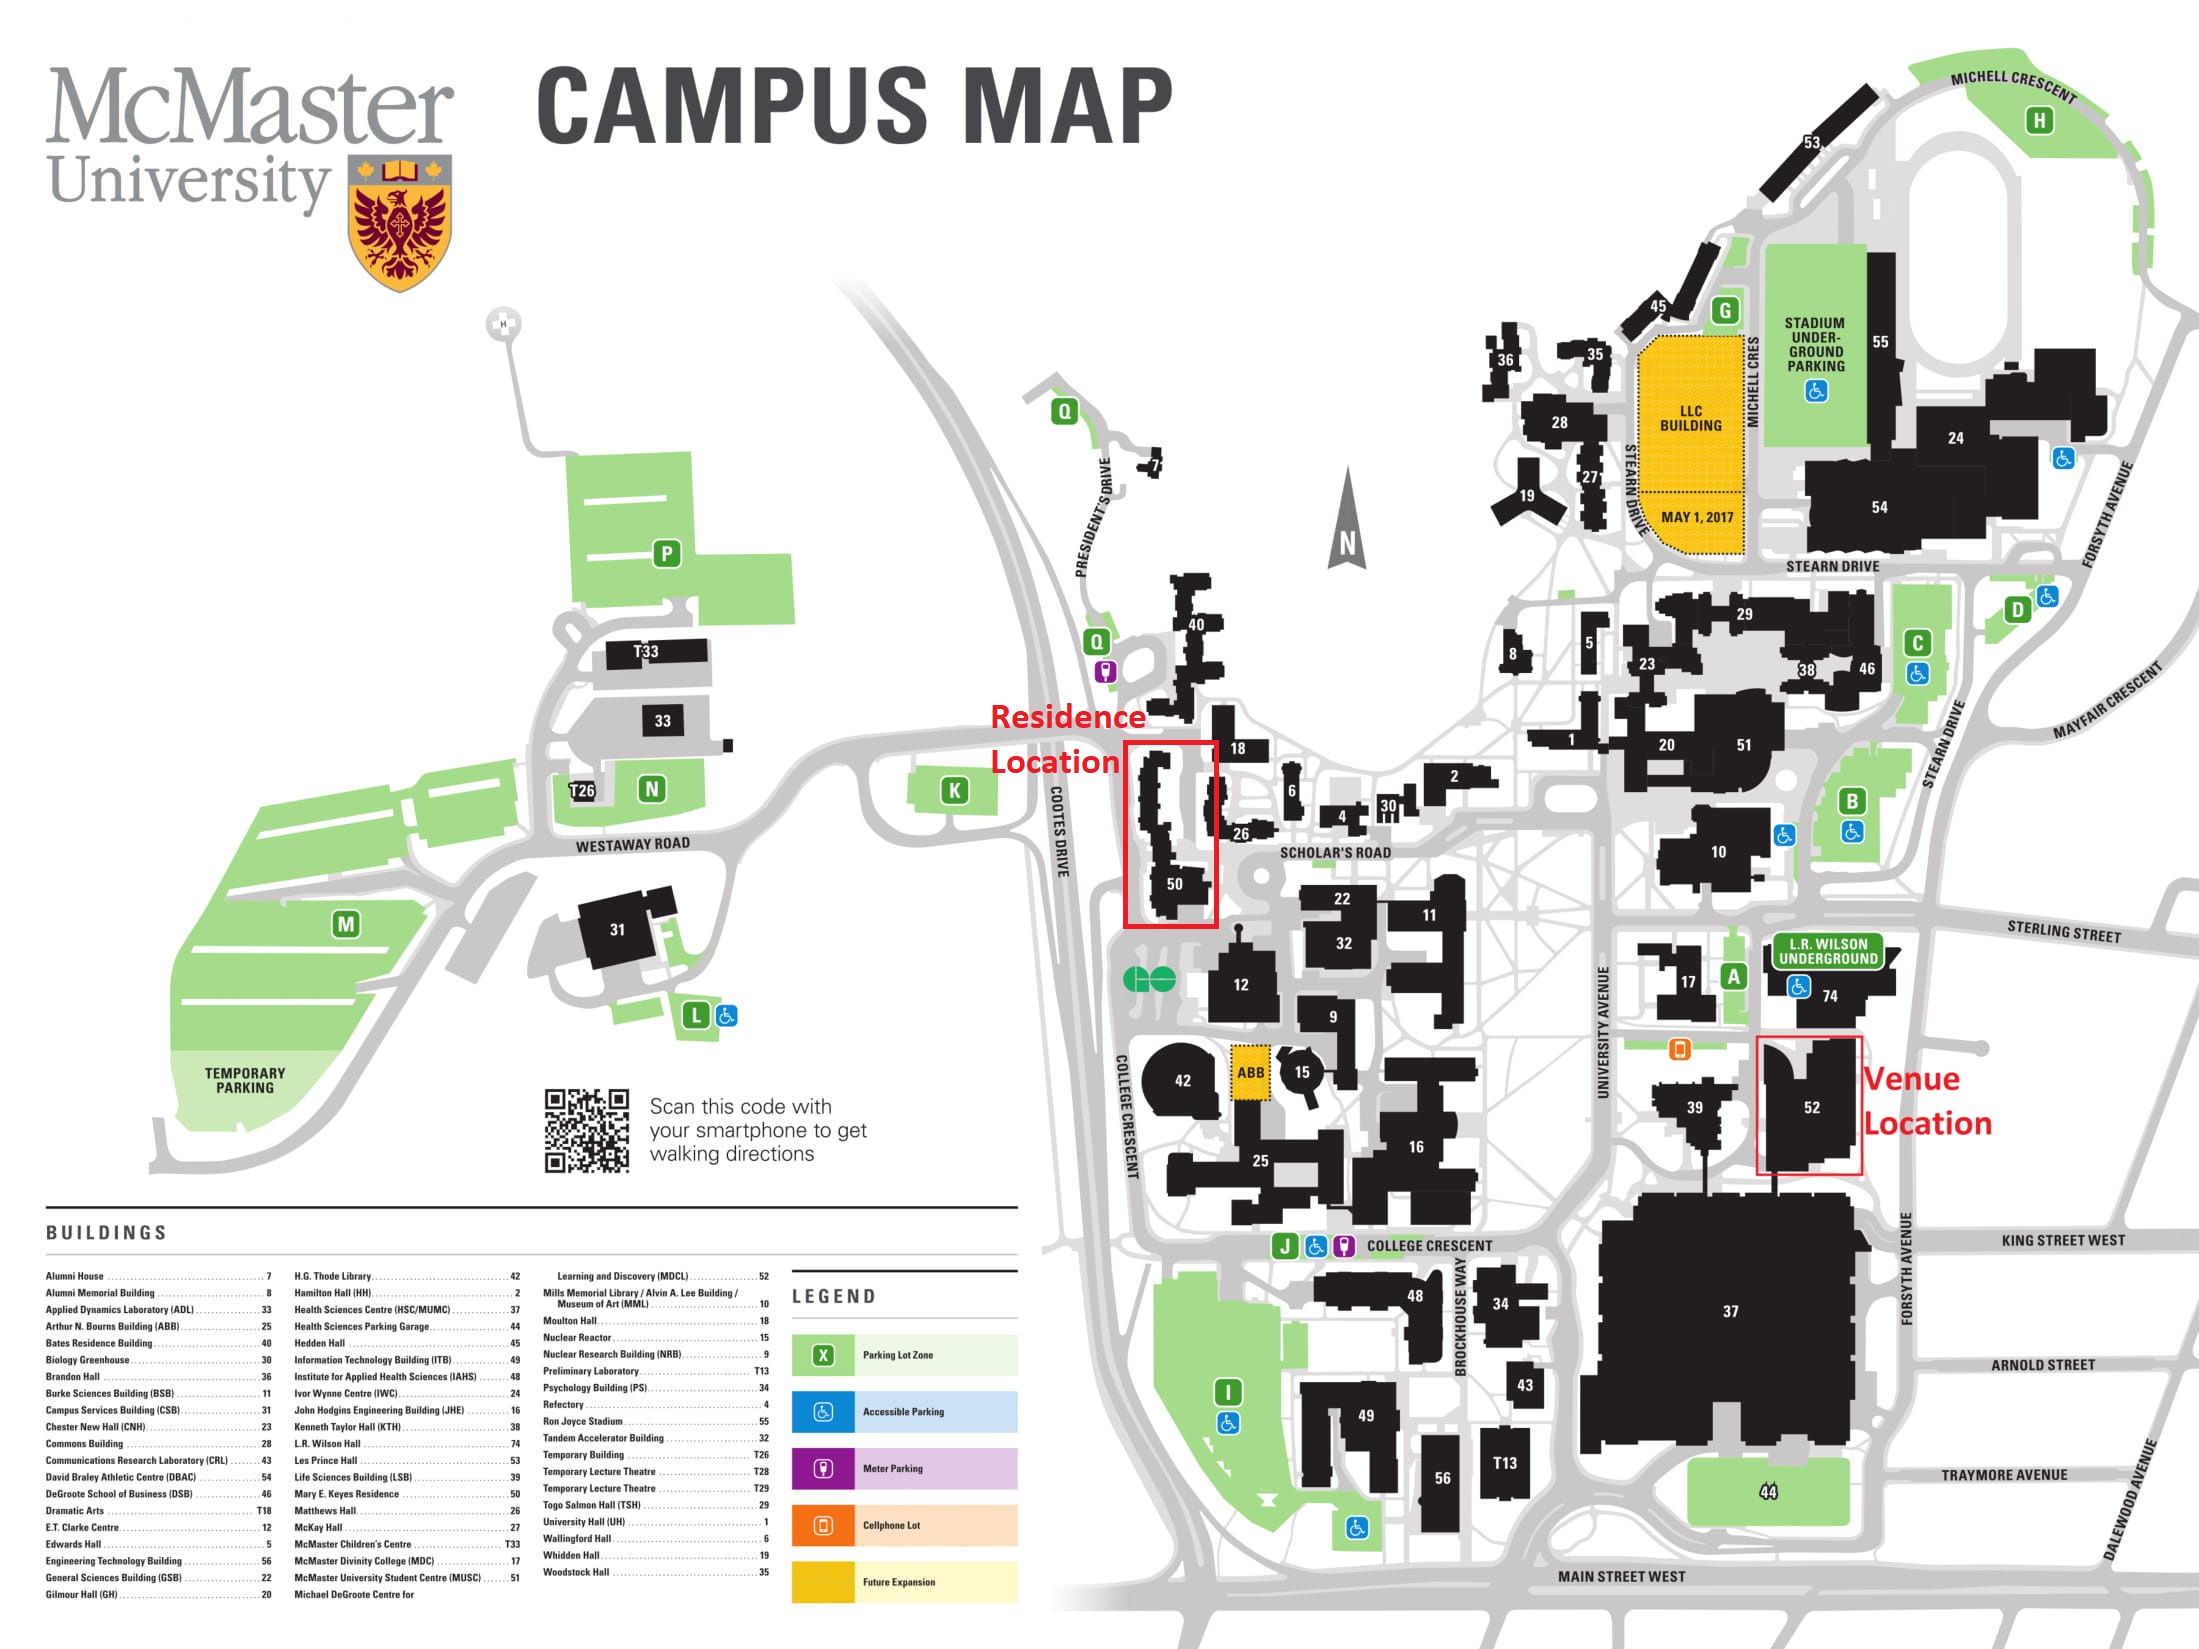 McMaster University's Parking map